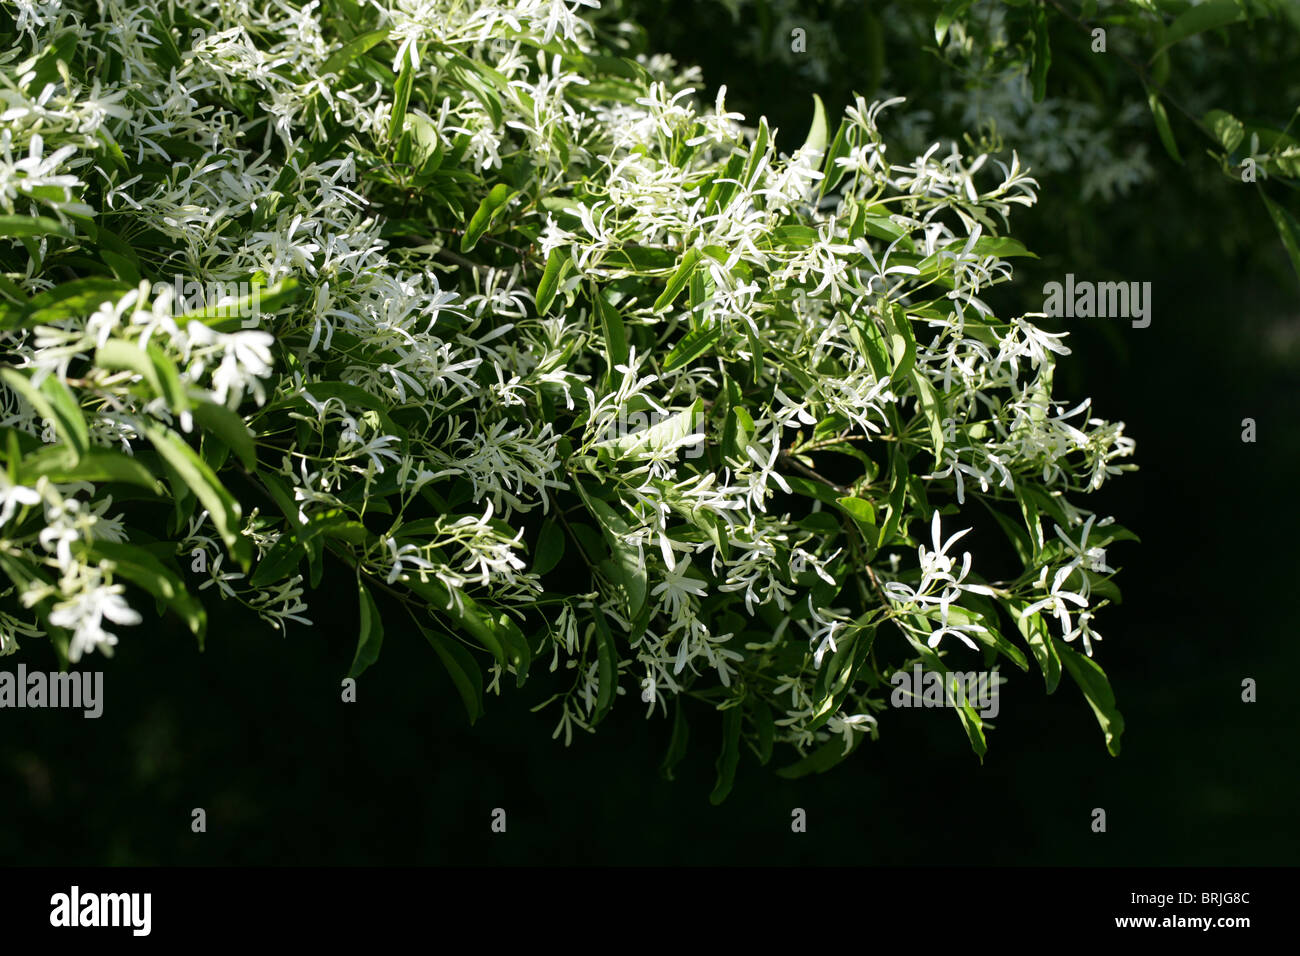 Fringe chino chino o árbol Fringetree, Chionanthus retusus, Oleaceae, al suroeste de China. Foto de stock